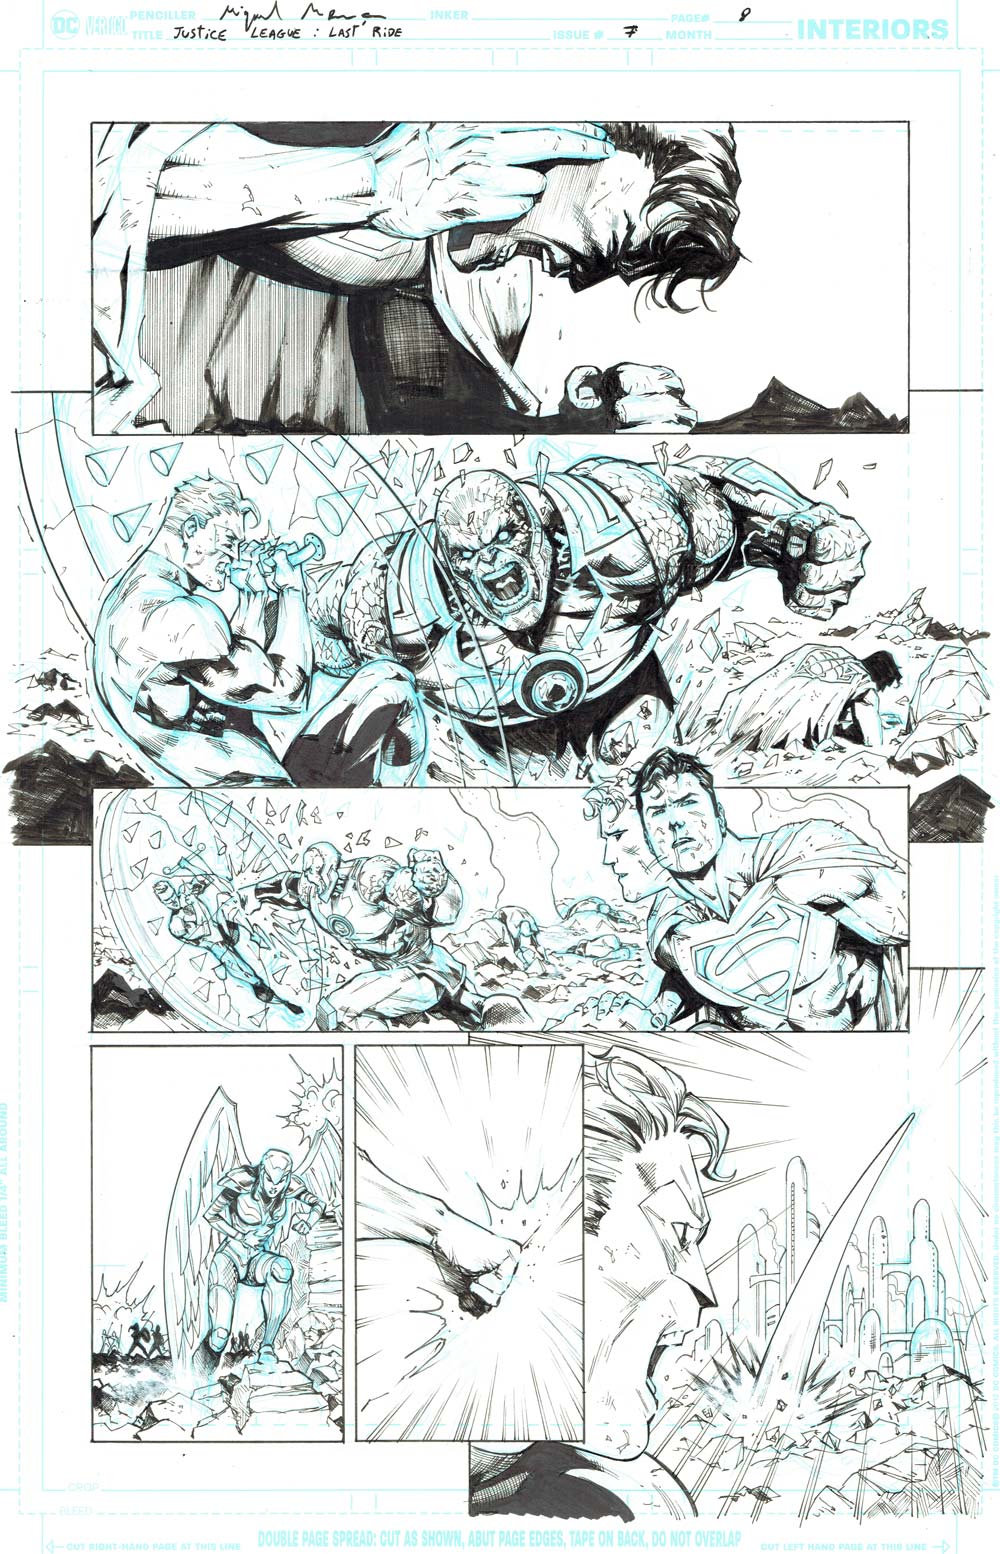 Justice League - Last Ride #4 (Page 8)